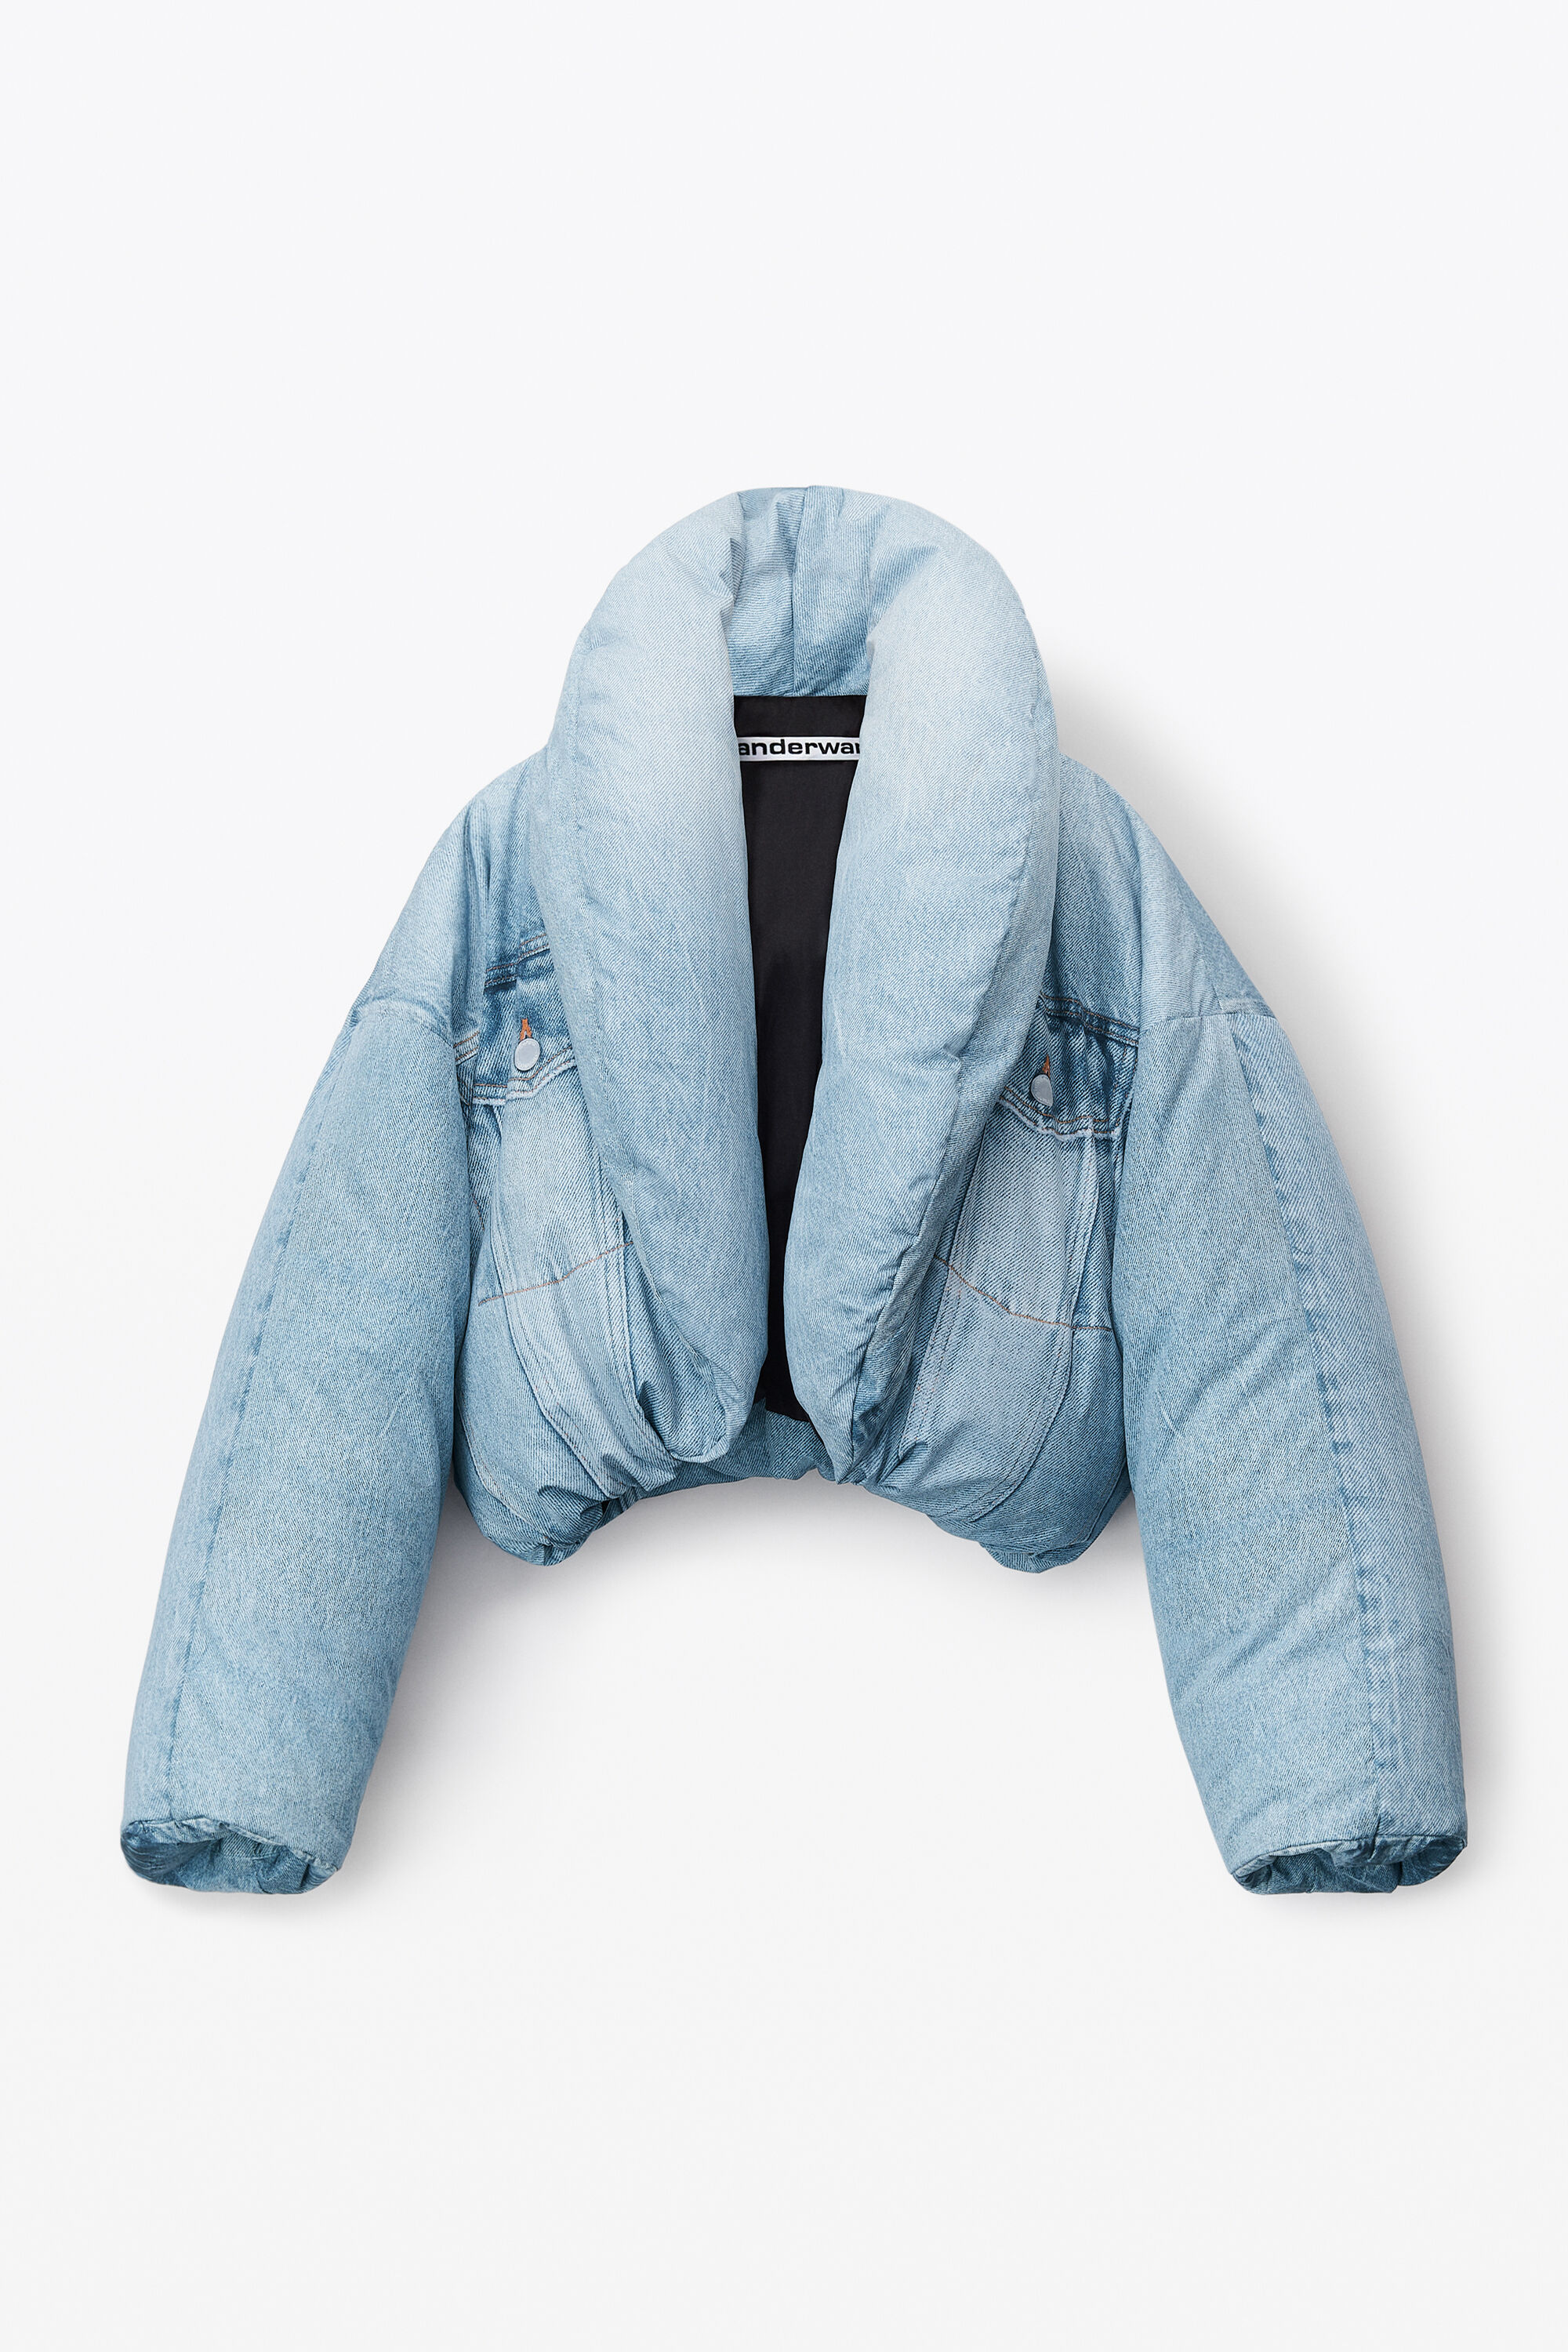 alexanderwang oversized cropped puffer jacket in nylon VINTAGE 